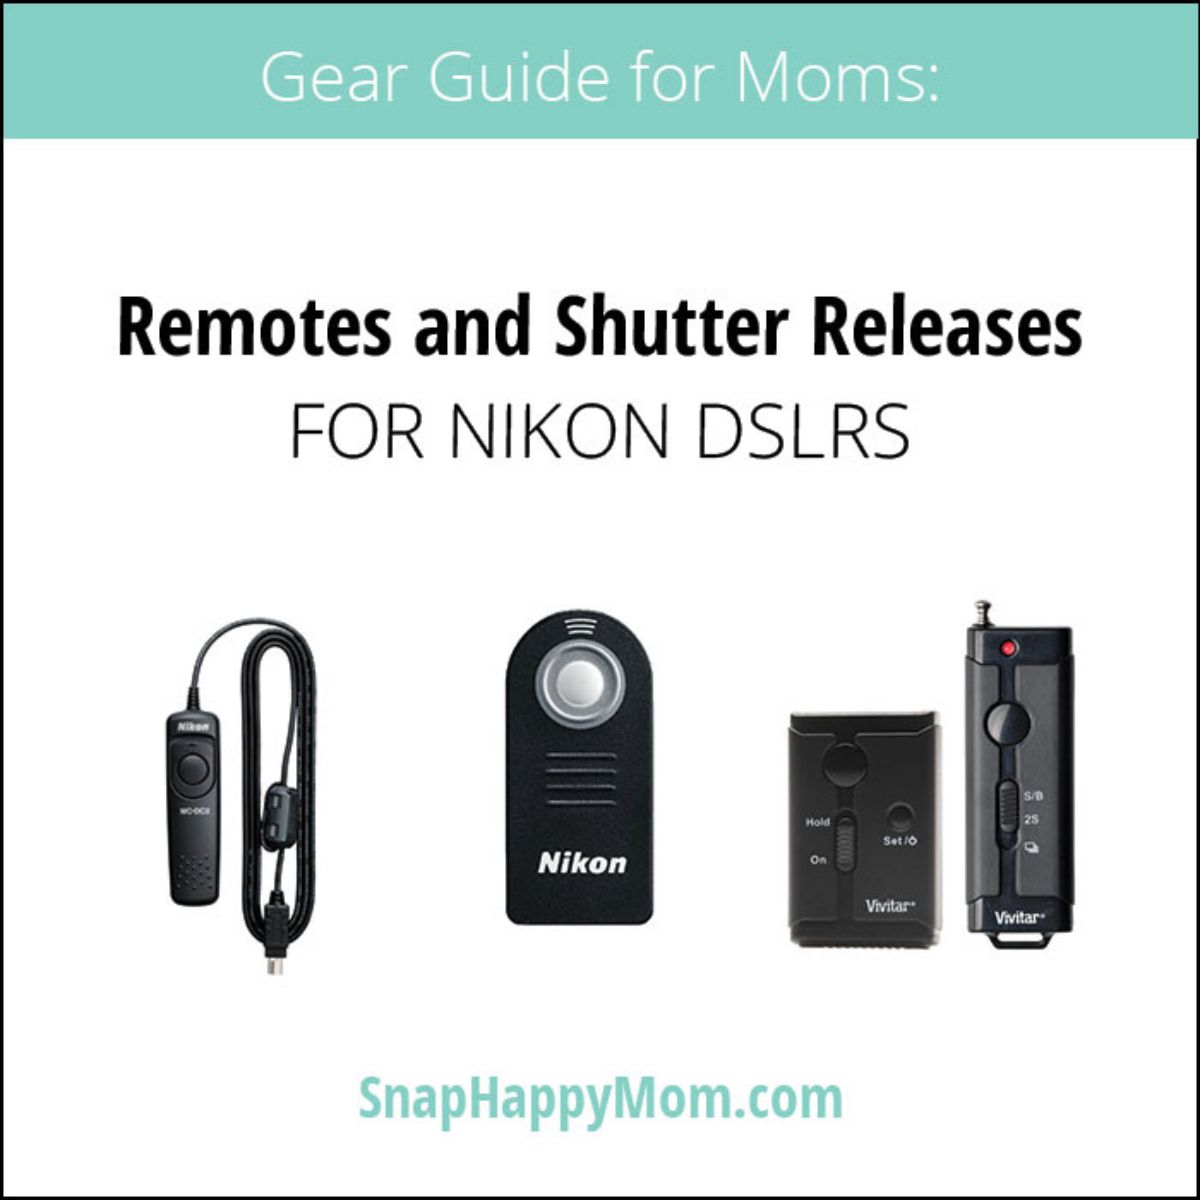 https://snaphappymom.com/wp-content/uploads/featured-image-nikon-remotes.jpg